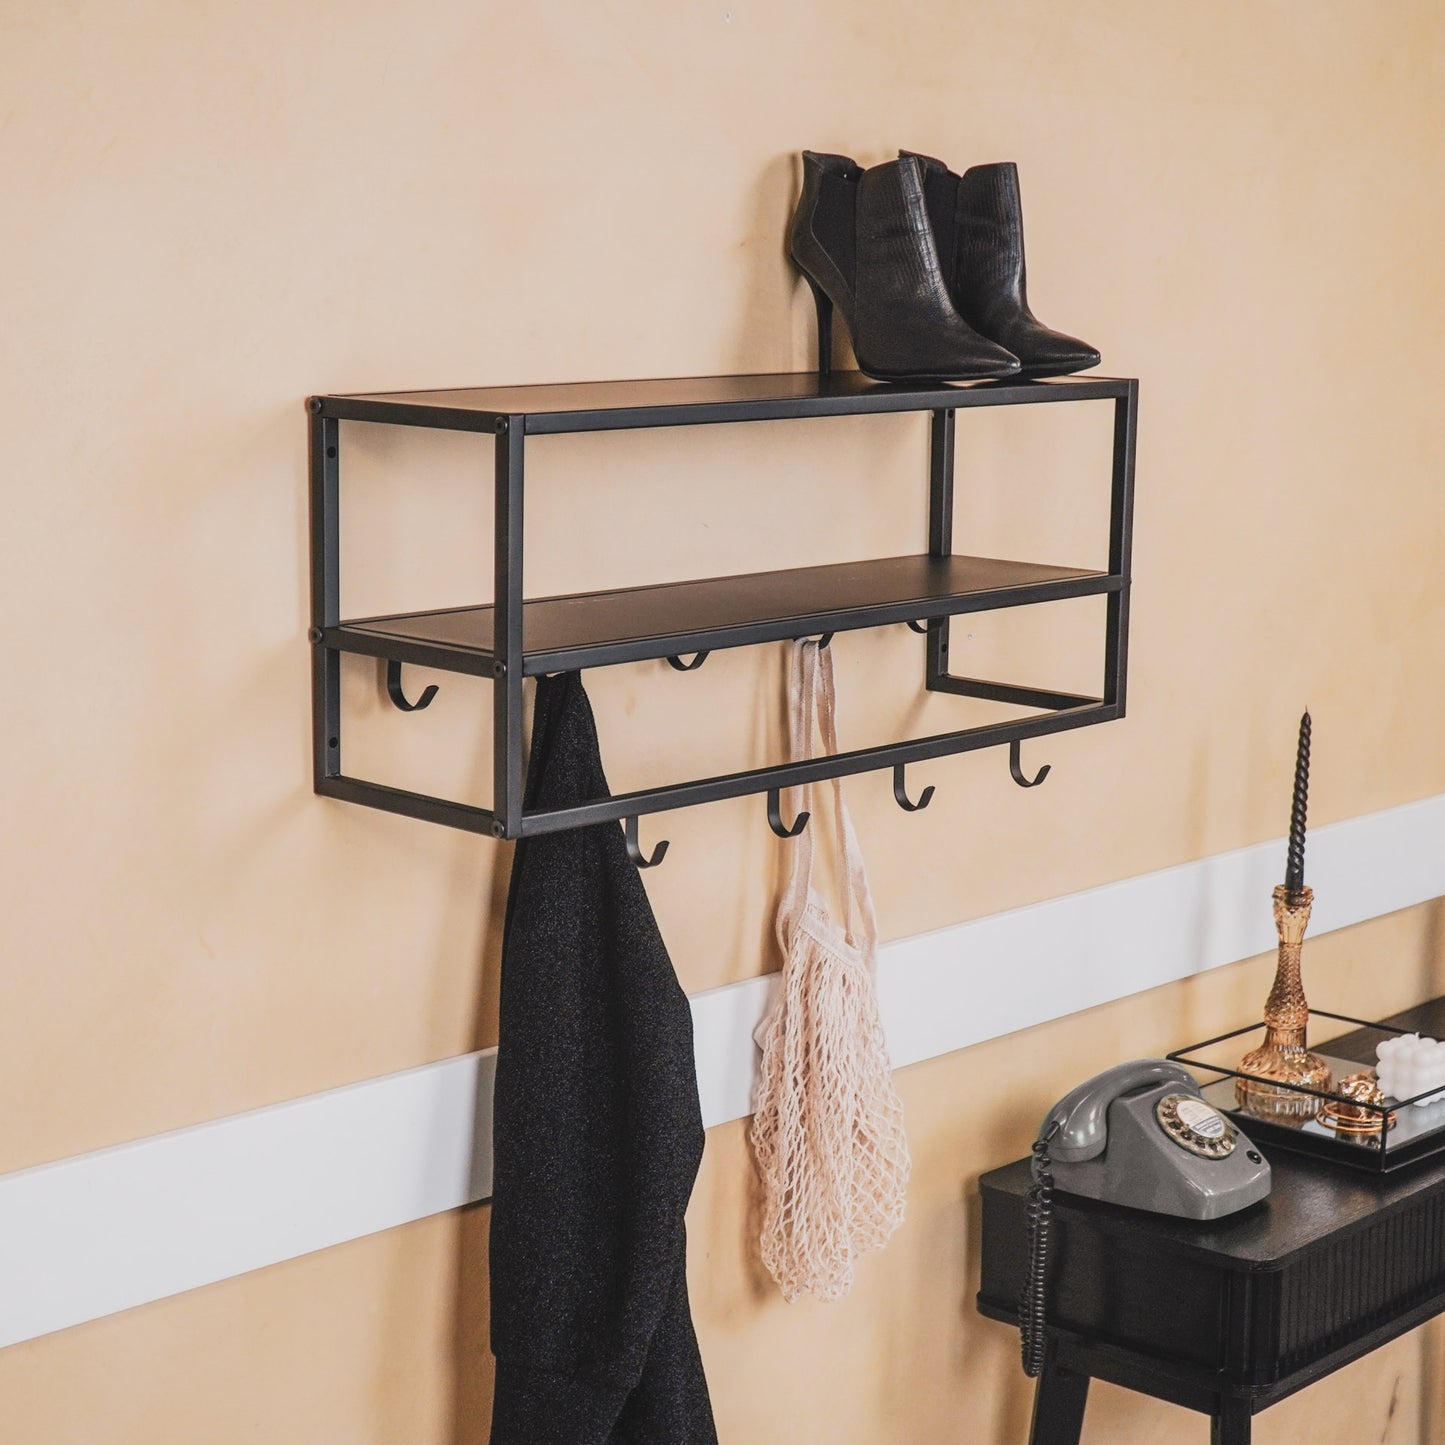 HV Metal Coat Rack with shelves - Black - 73x21x29,5cm